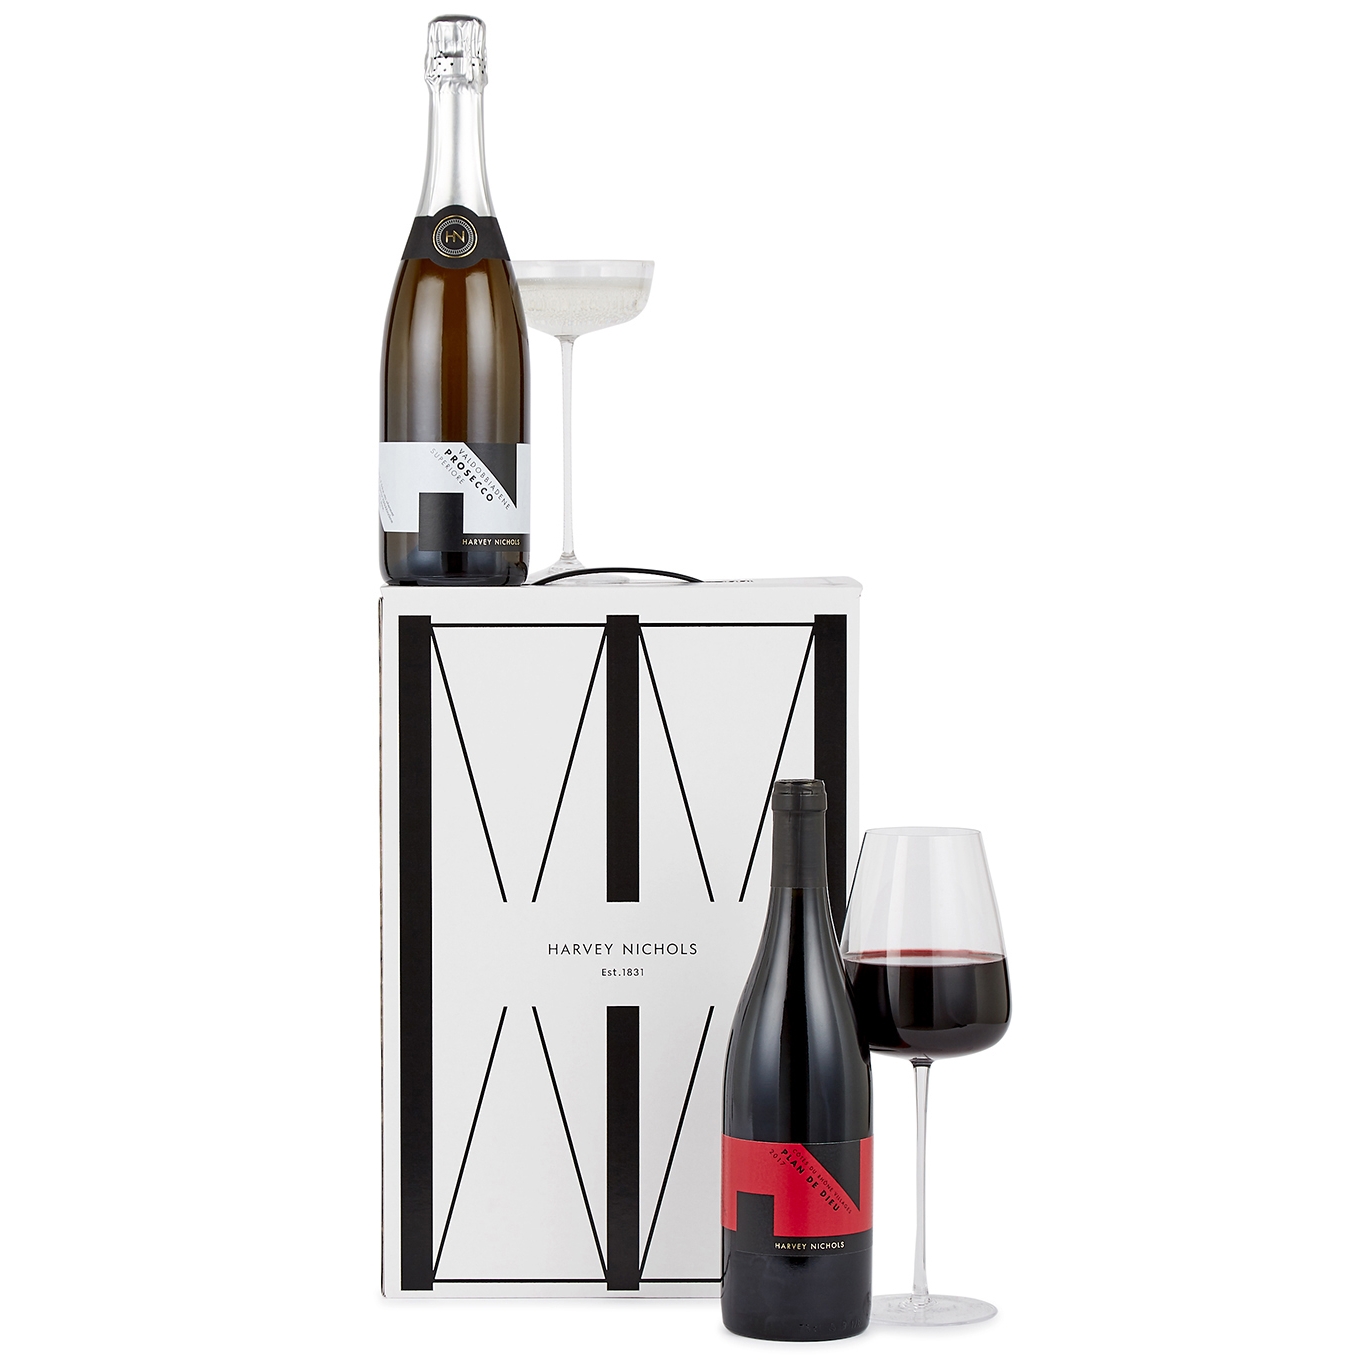 Harvey Nichols Prosecco & Red Wine Gift Box, Wine Hamper, 750ml Red Wine